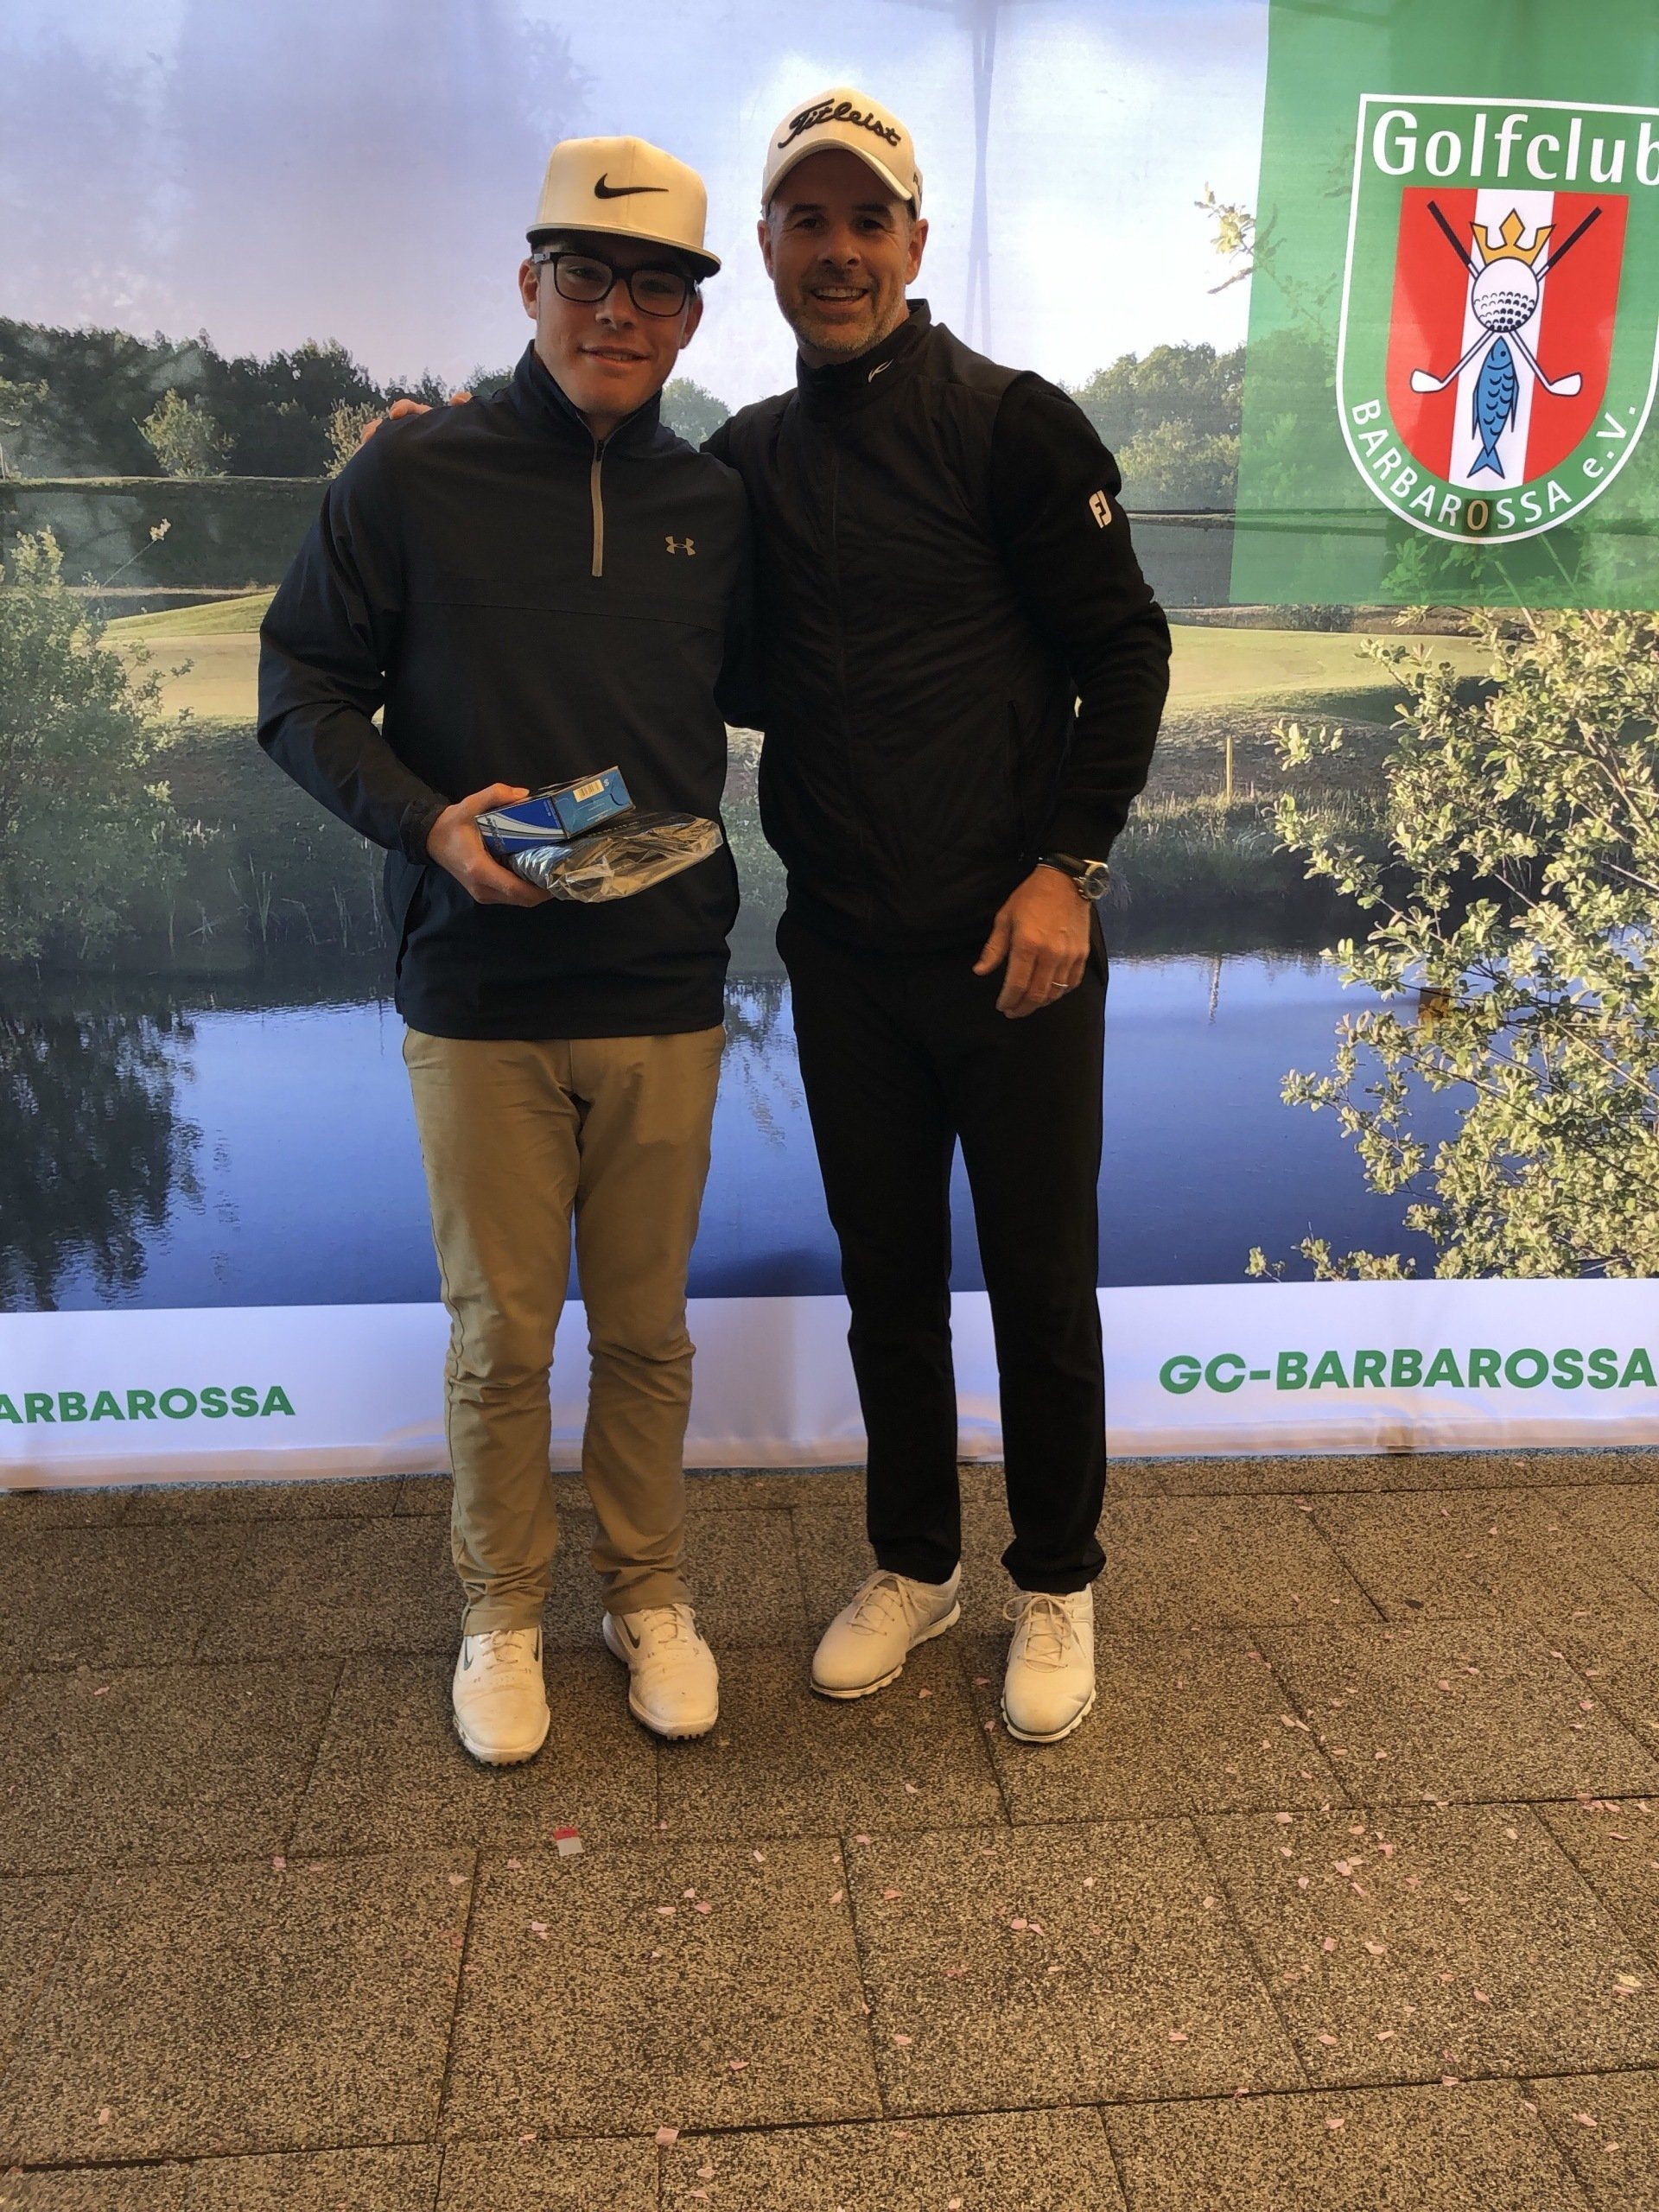 Impressionen vom Golfclub Barbarossa